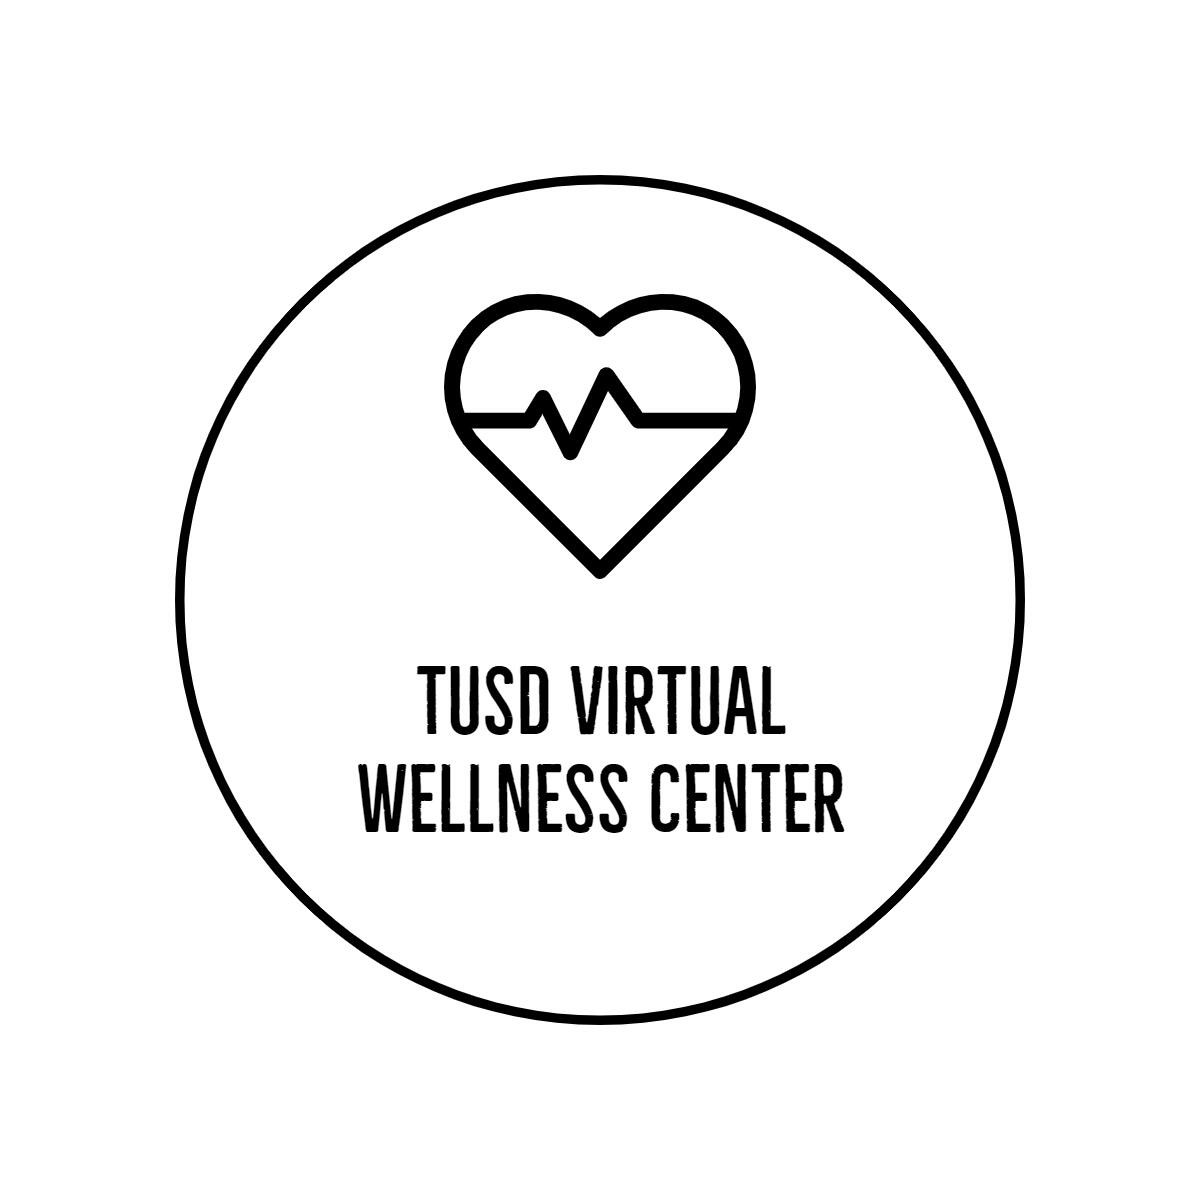 Visit TUSD Virtual Wellness Center